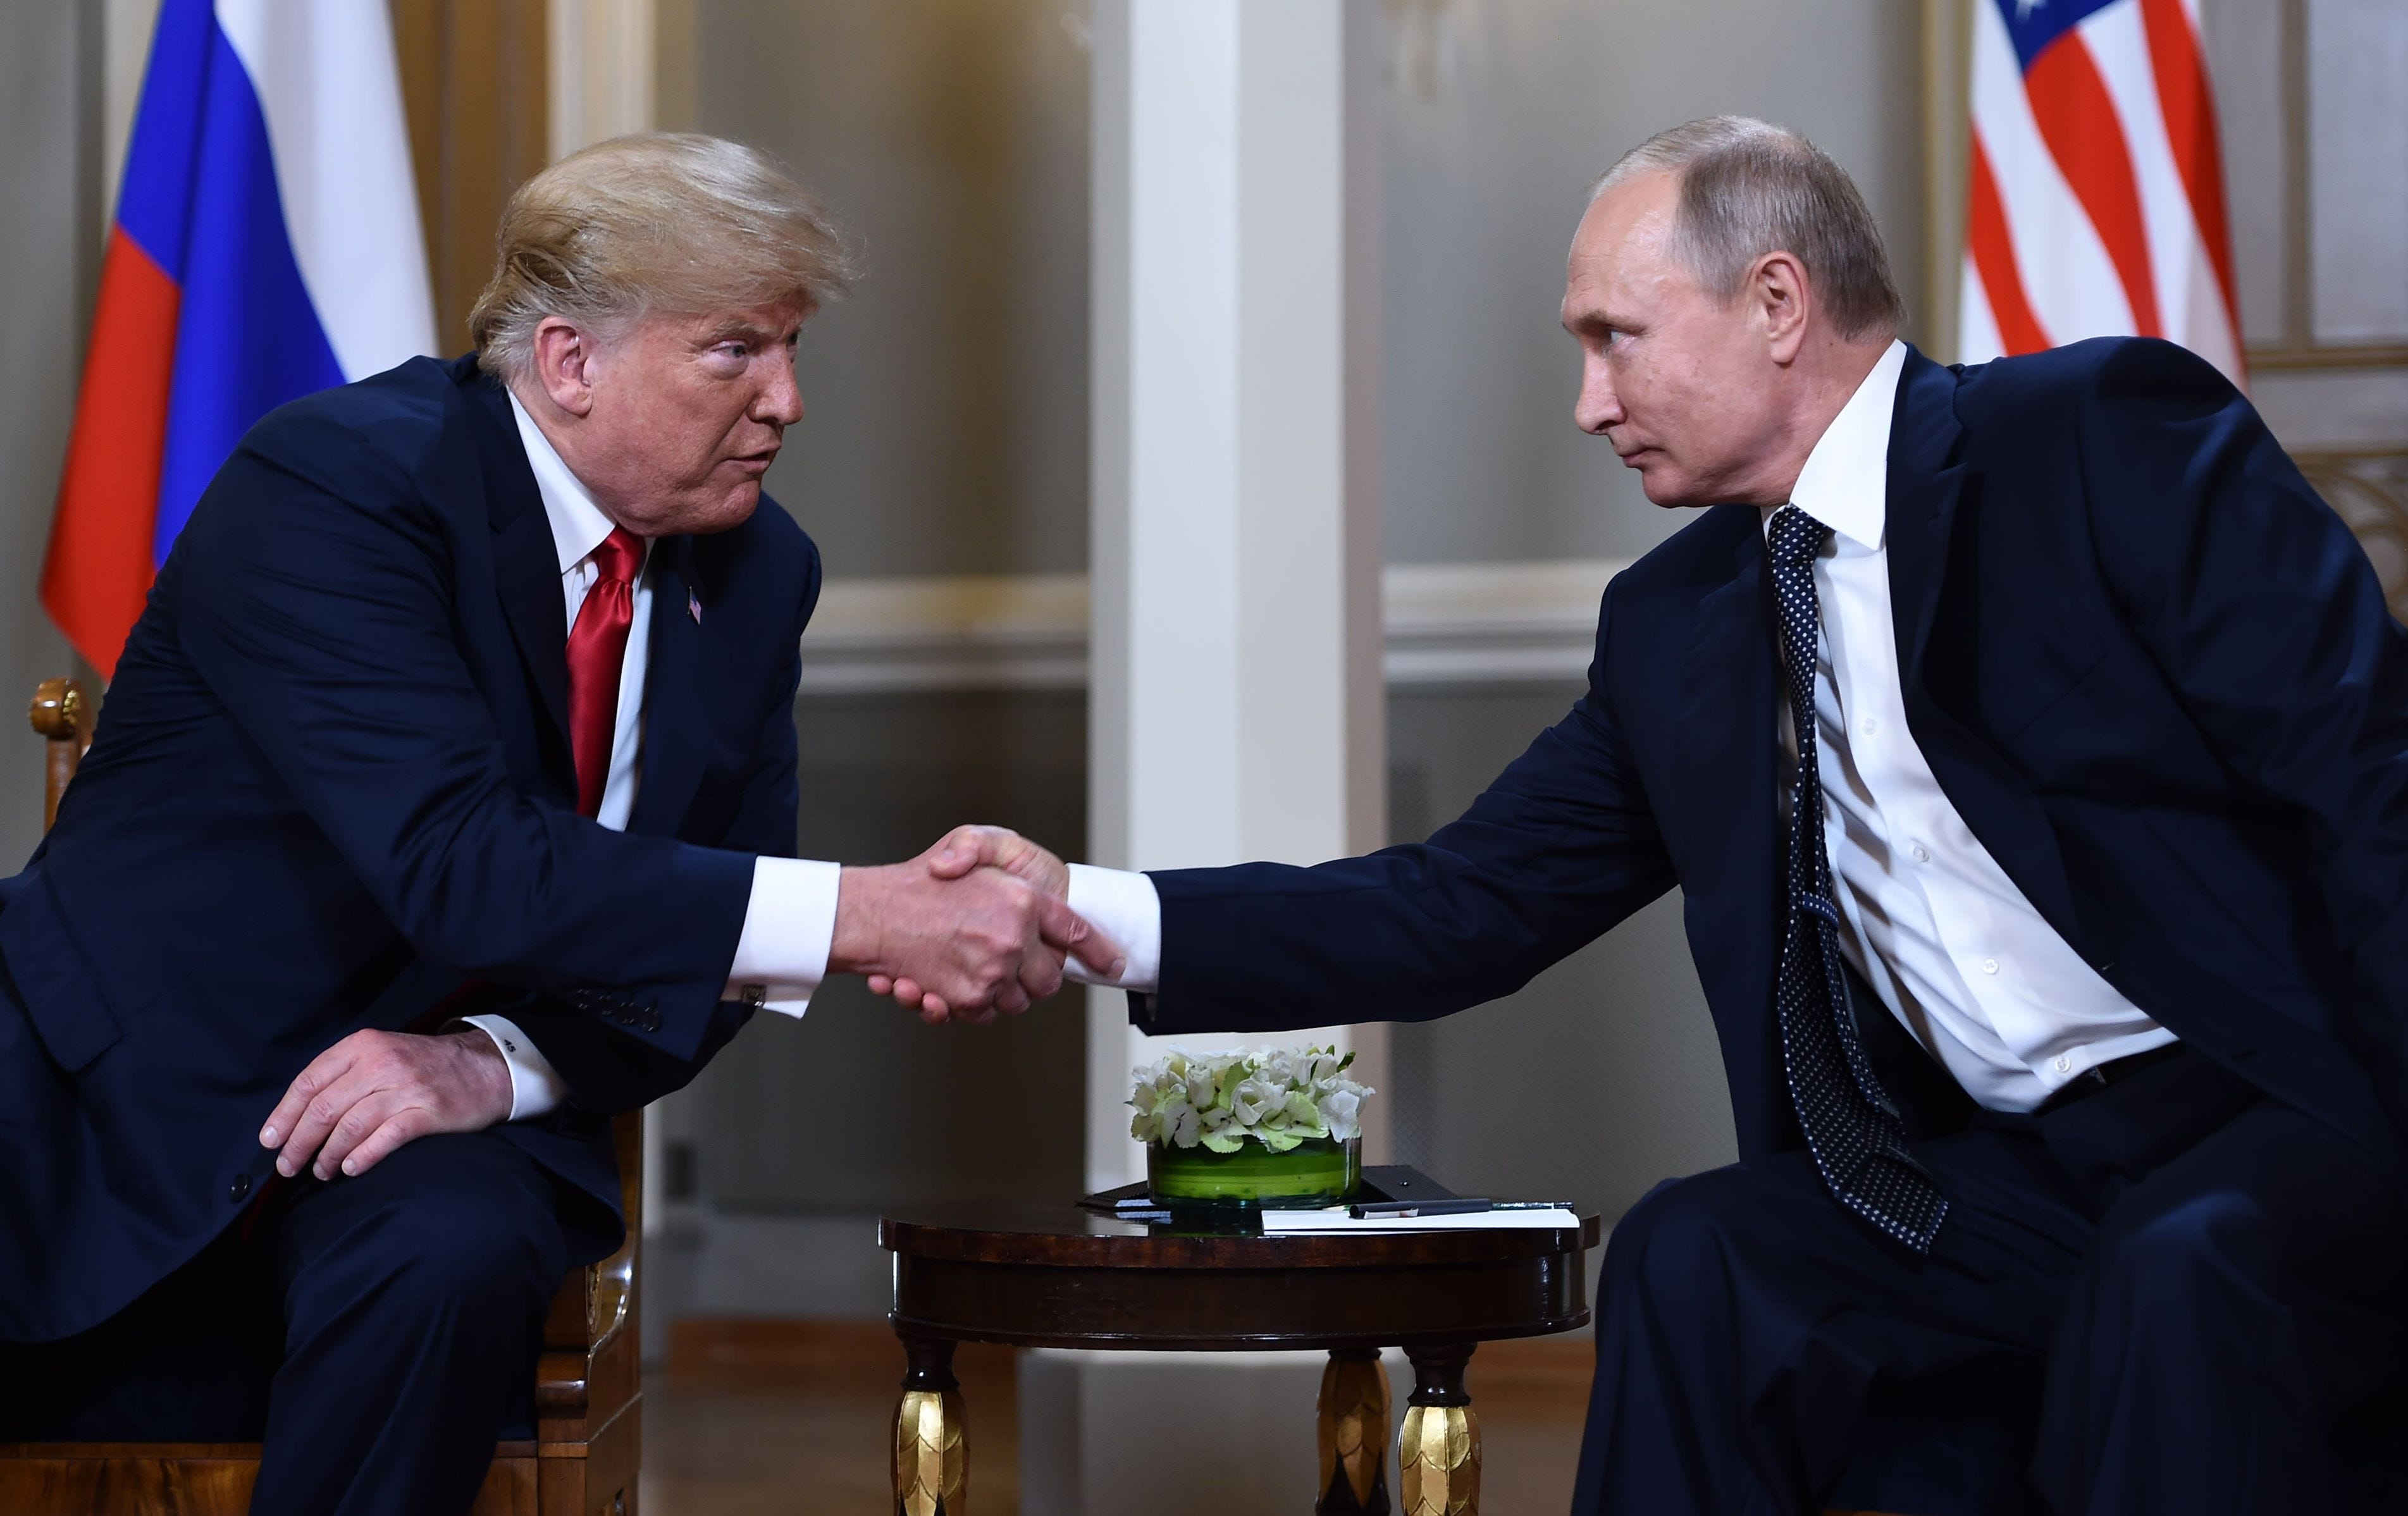 Russian President Vladimir Putin (R) and President Trump shake hands before a meeting in Helsinki, on July 16, 2018.